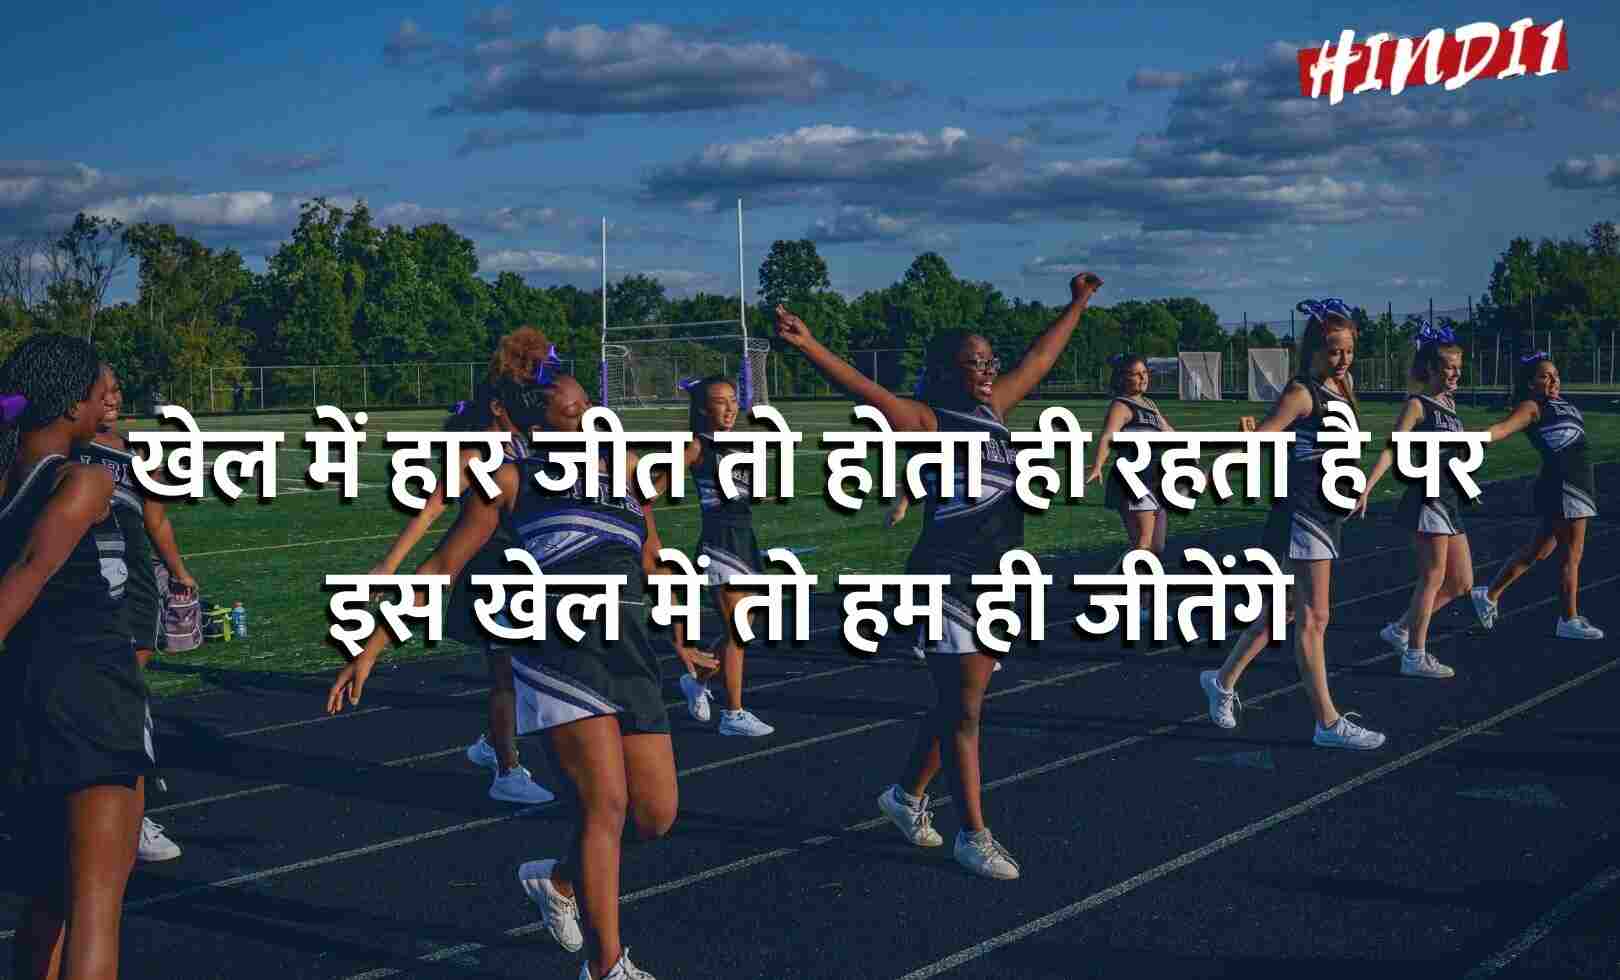 Cheerleaders Slogan 